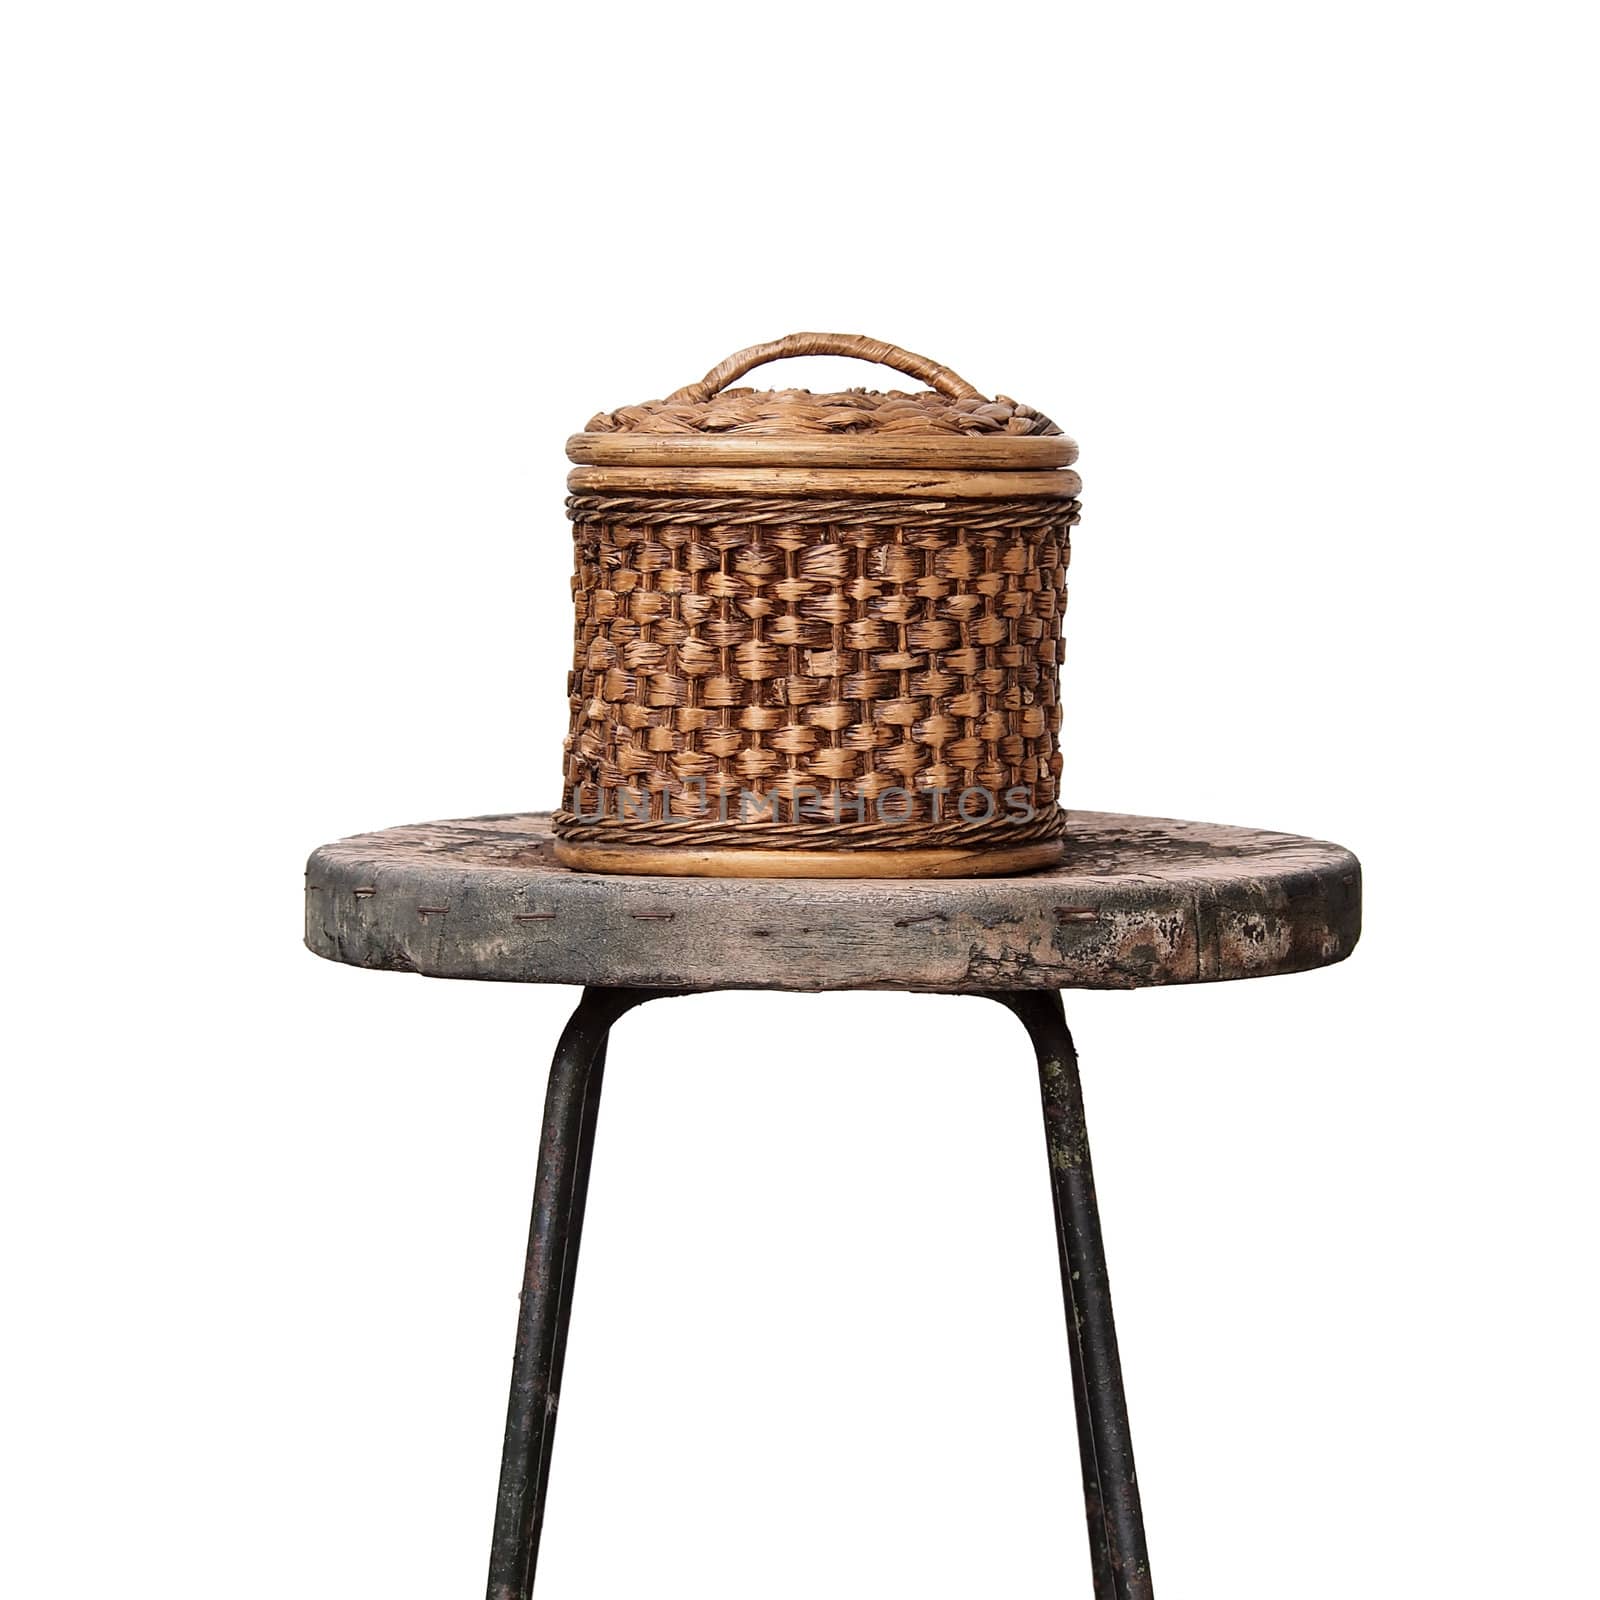 Basket wicker is Thai handmade on grunge chair by siraanamwong